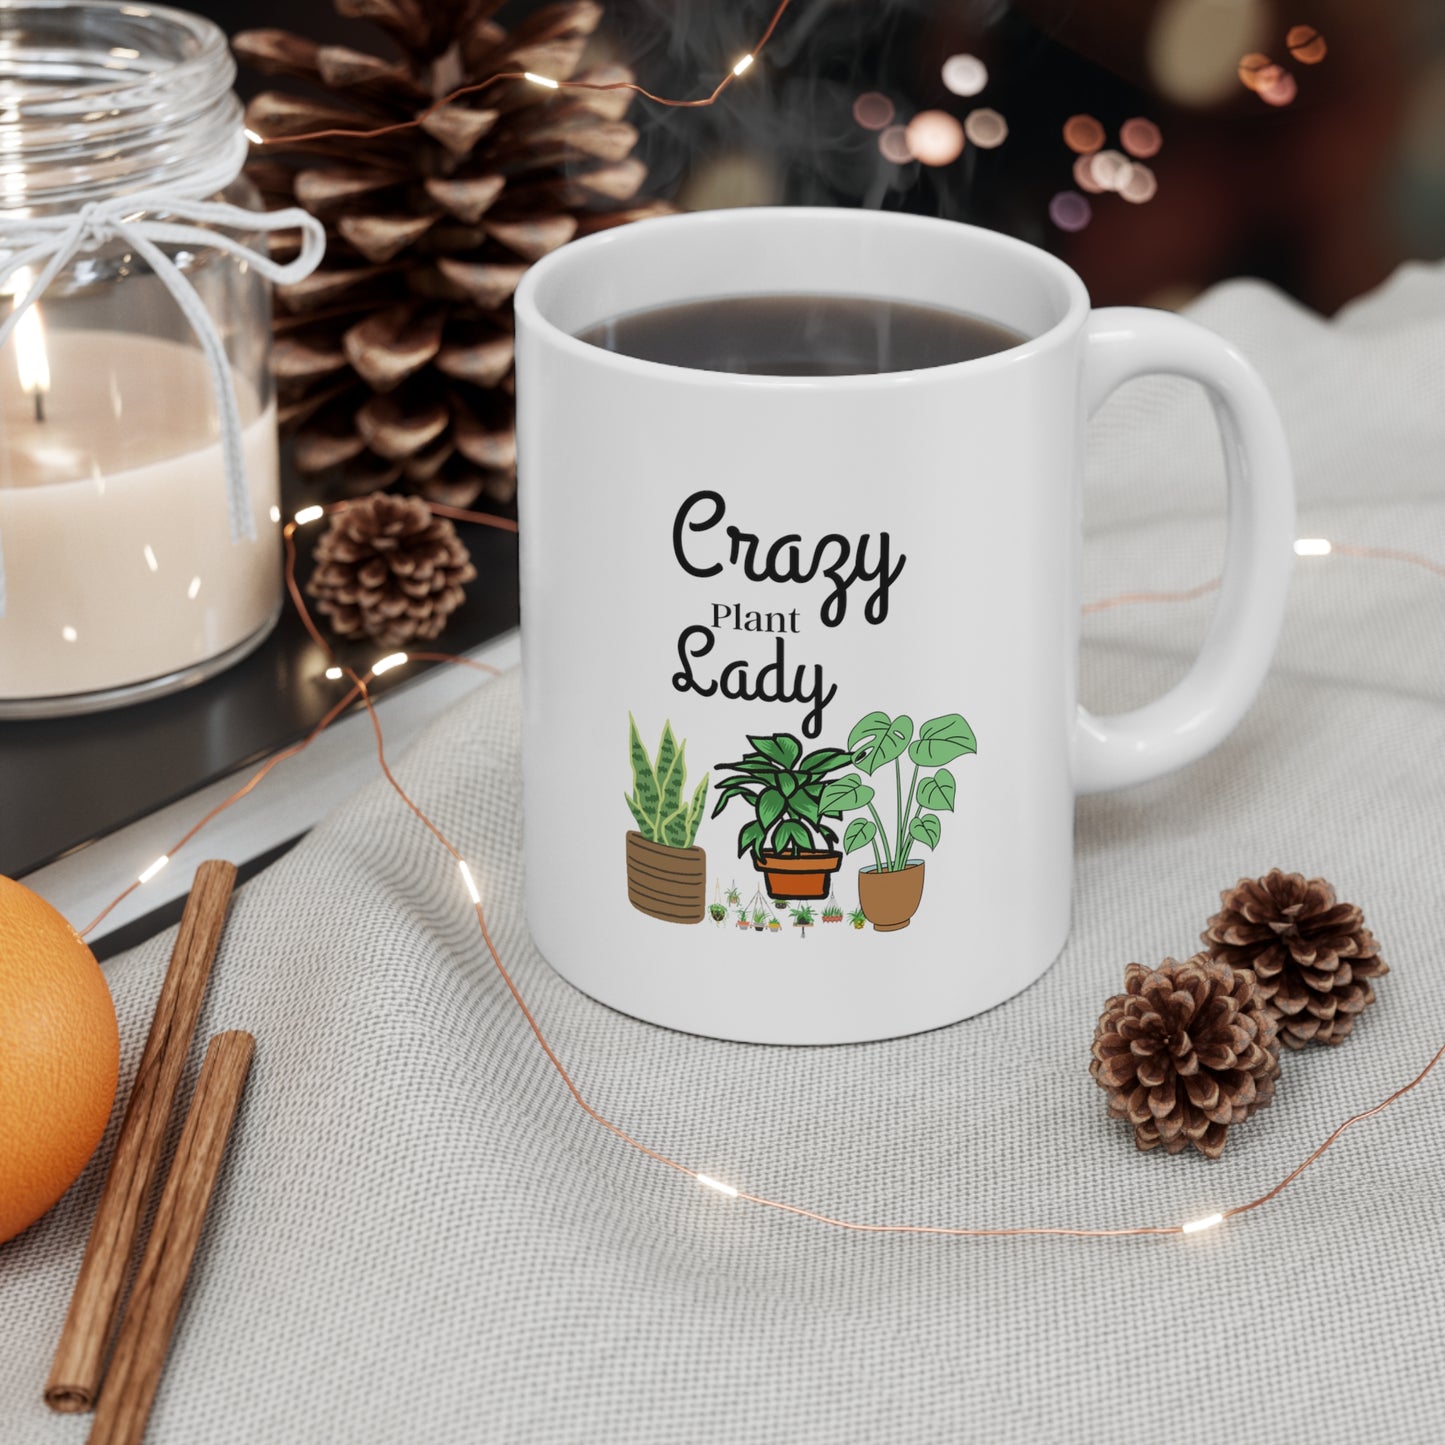 Crazy Plant Lady Coffee Mug